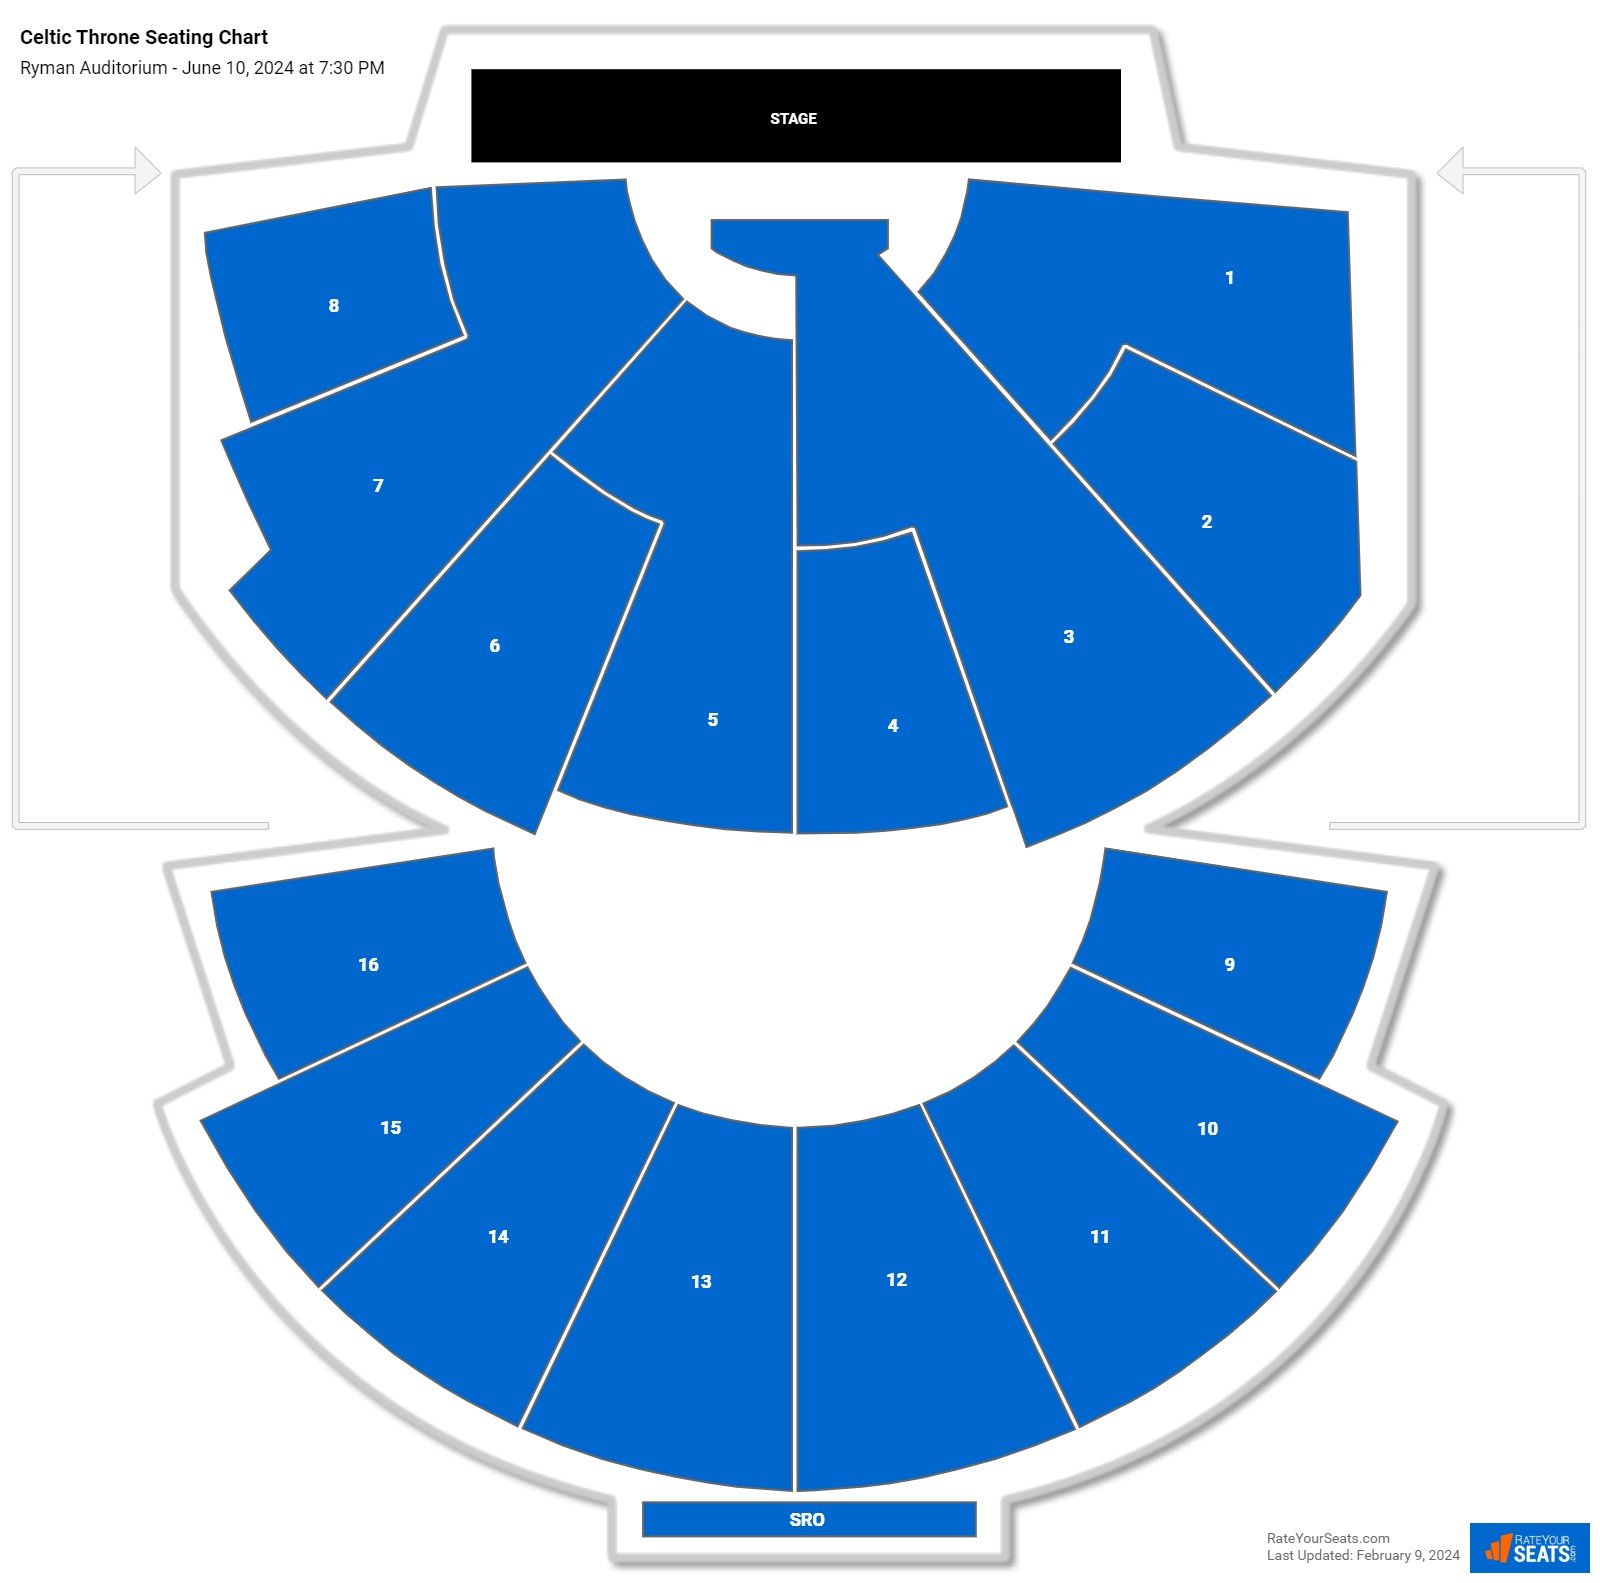 Celtic Throne seating chart Ryman Auditorium